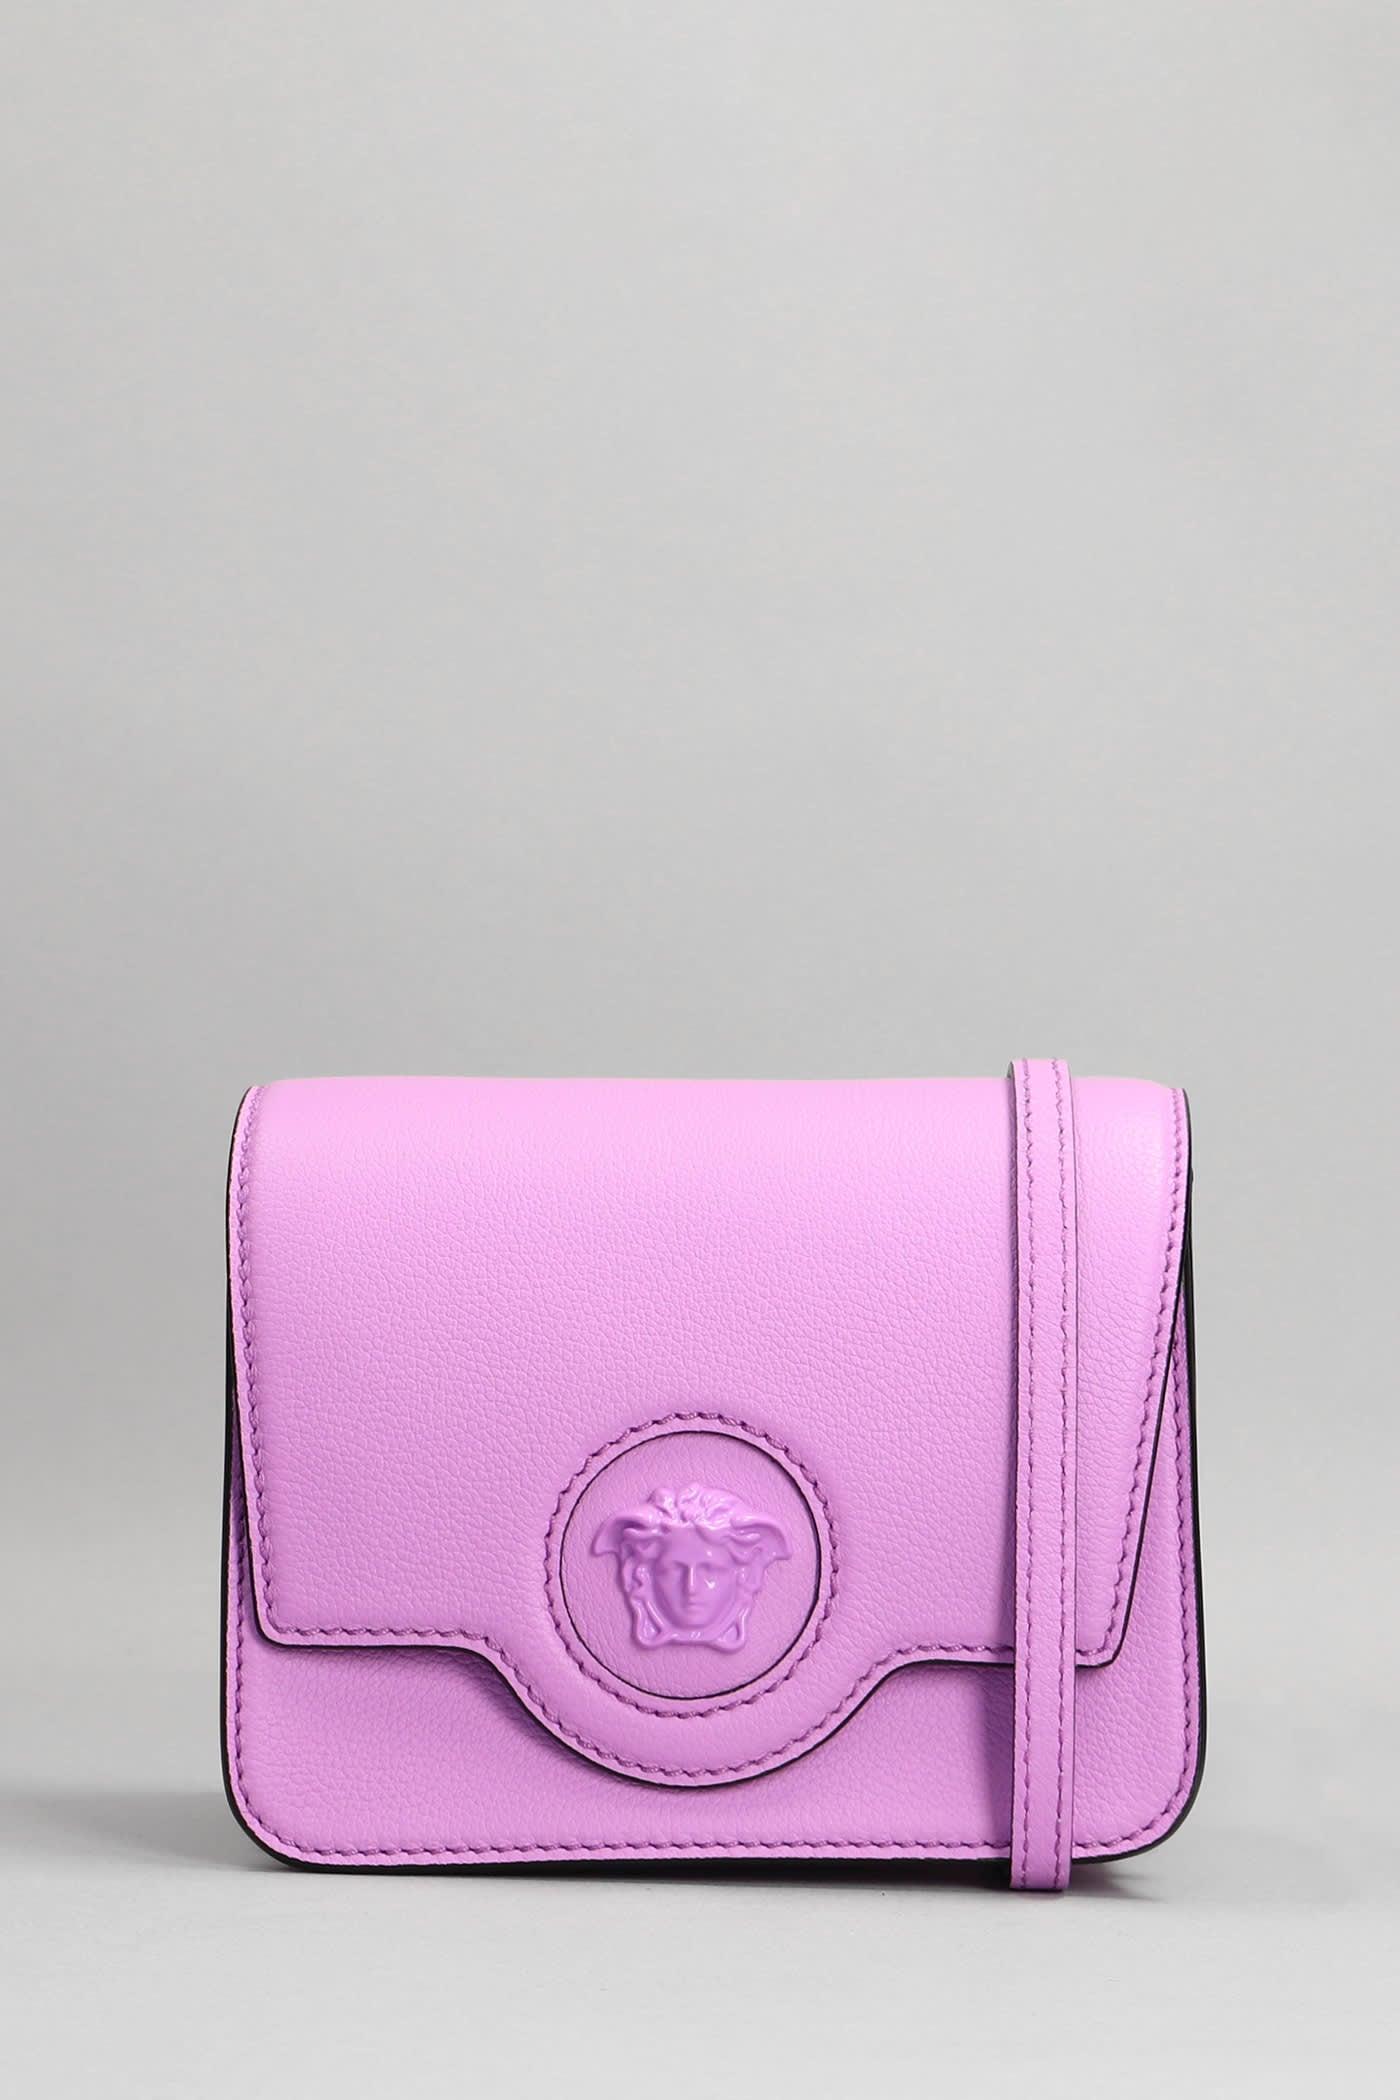 Versace Ladies Baby Pink Leather La Medusa Shoulder Bag  1003017-DVIT2T-1P65V 8052045776404 - Handbags - Jomashop